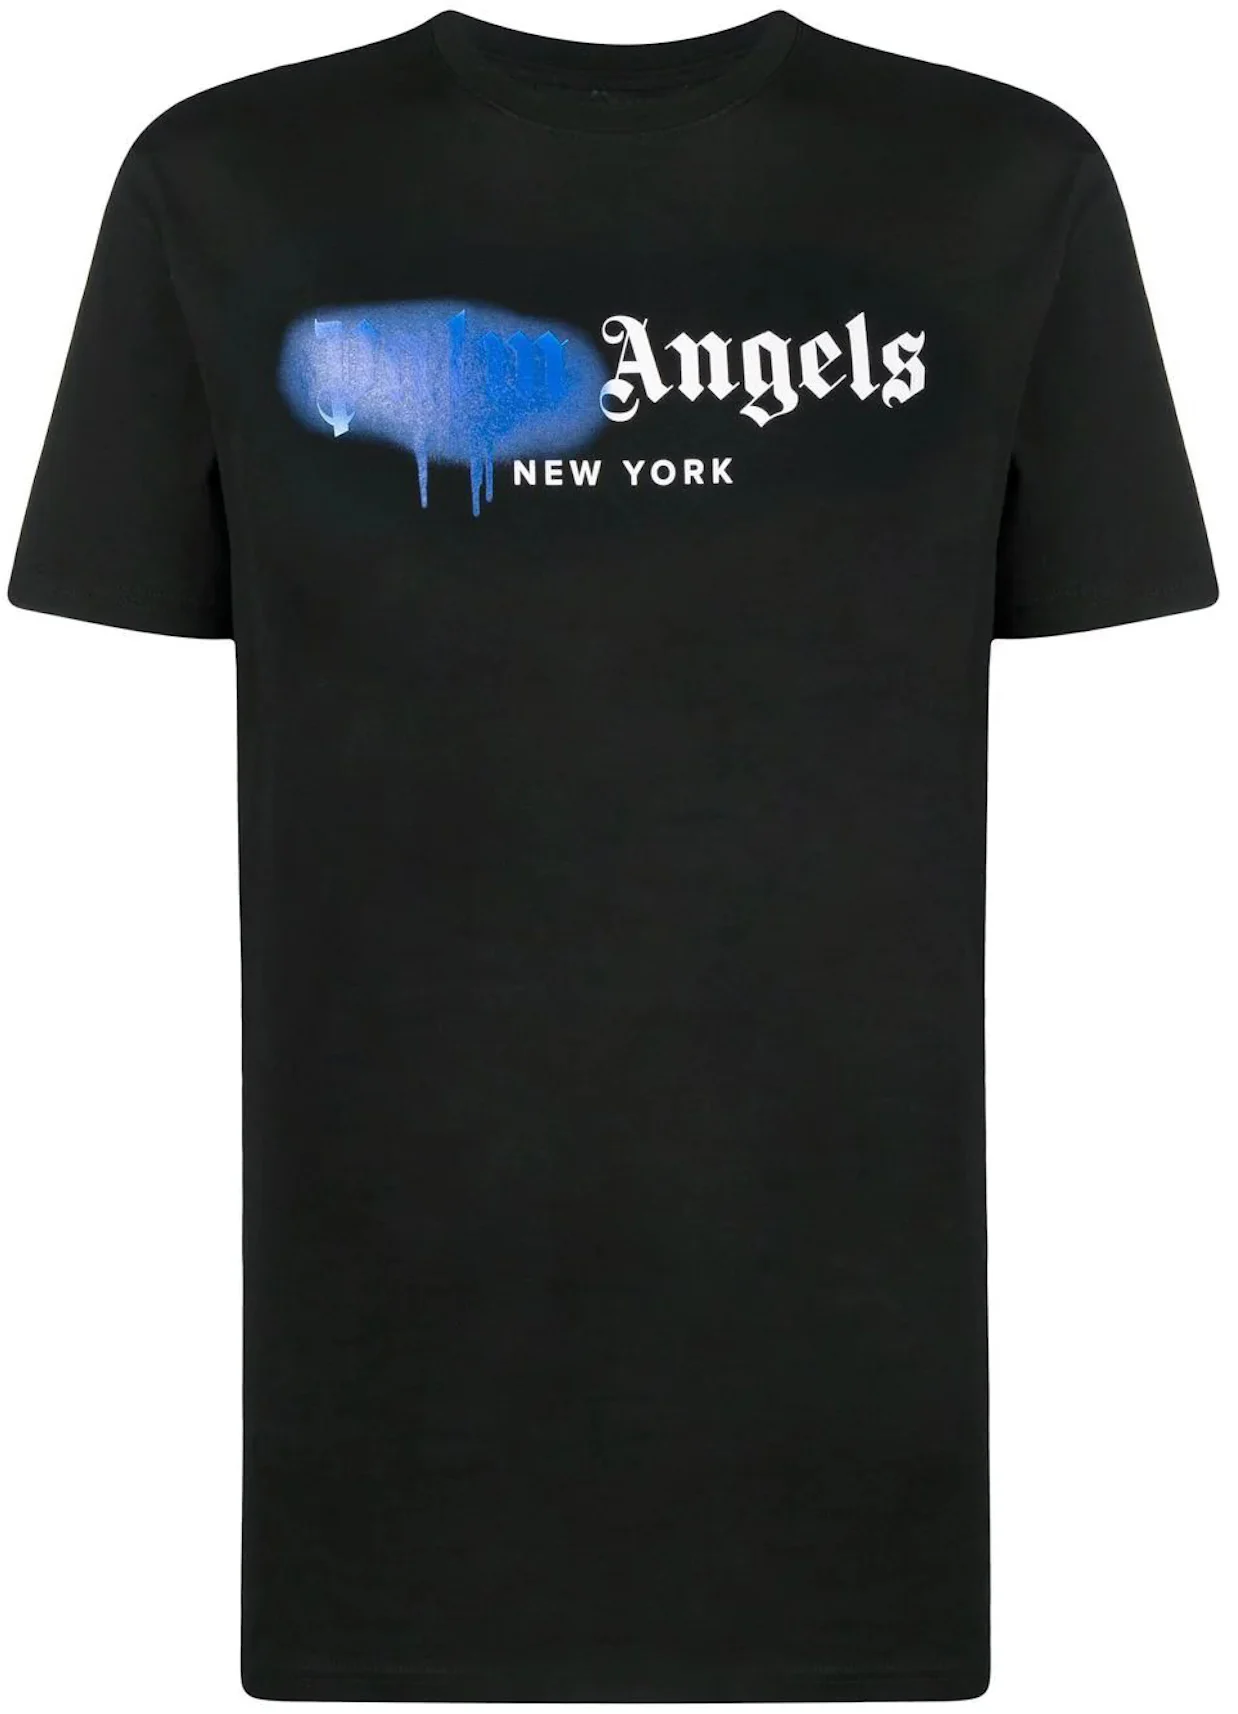 https://images.stockx.com/images/Palm-Angels-New-York-Sprayed-T-Shirt-Black.jpg?fit=fill&bg=FFFFFF&w=1200&h=857&fm=webp&auto=compress&dpr=2&trim=color&updated_at=1619753619&q=60